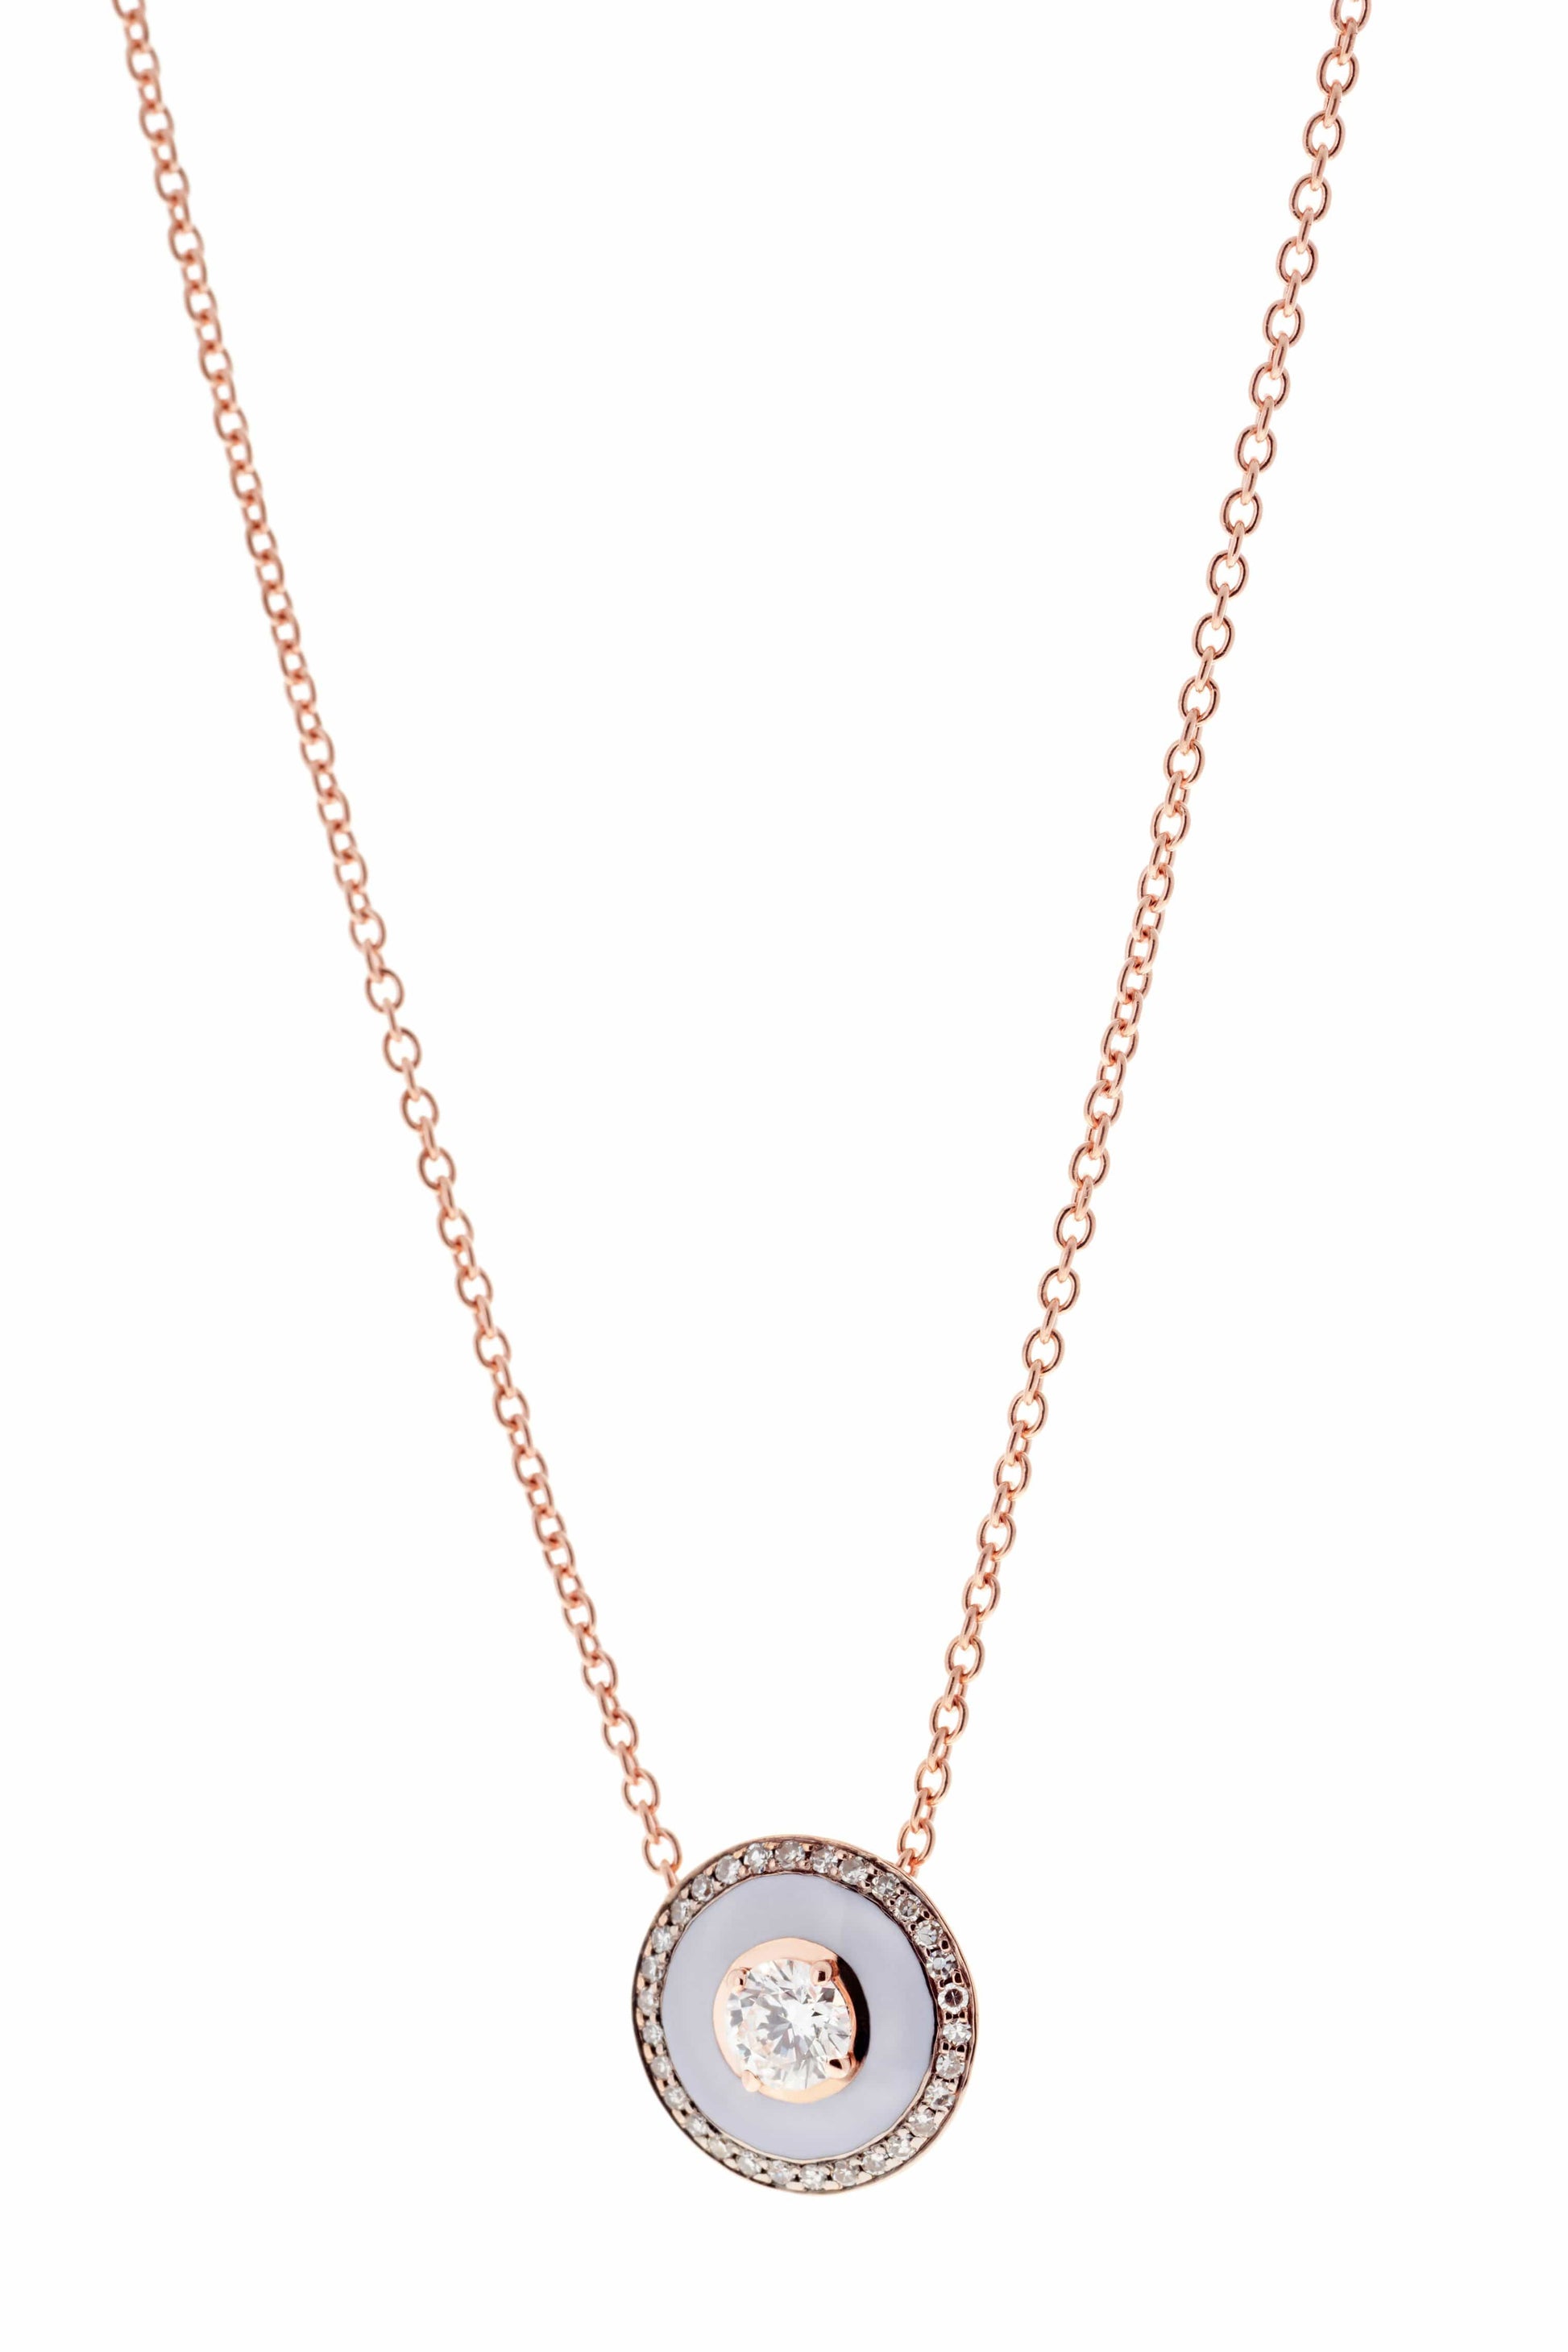 SELIM MOUZANNAR-Lilac Enamel Diamond Pendant Necklace-ROSE GOLD